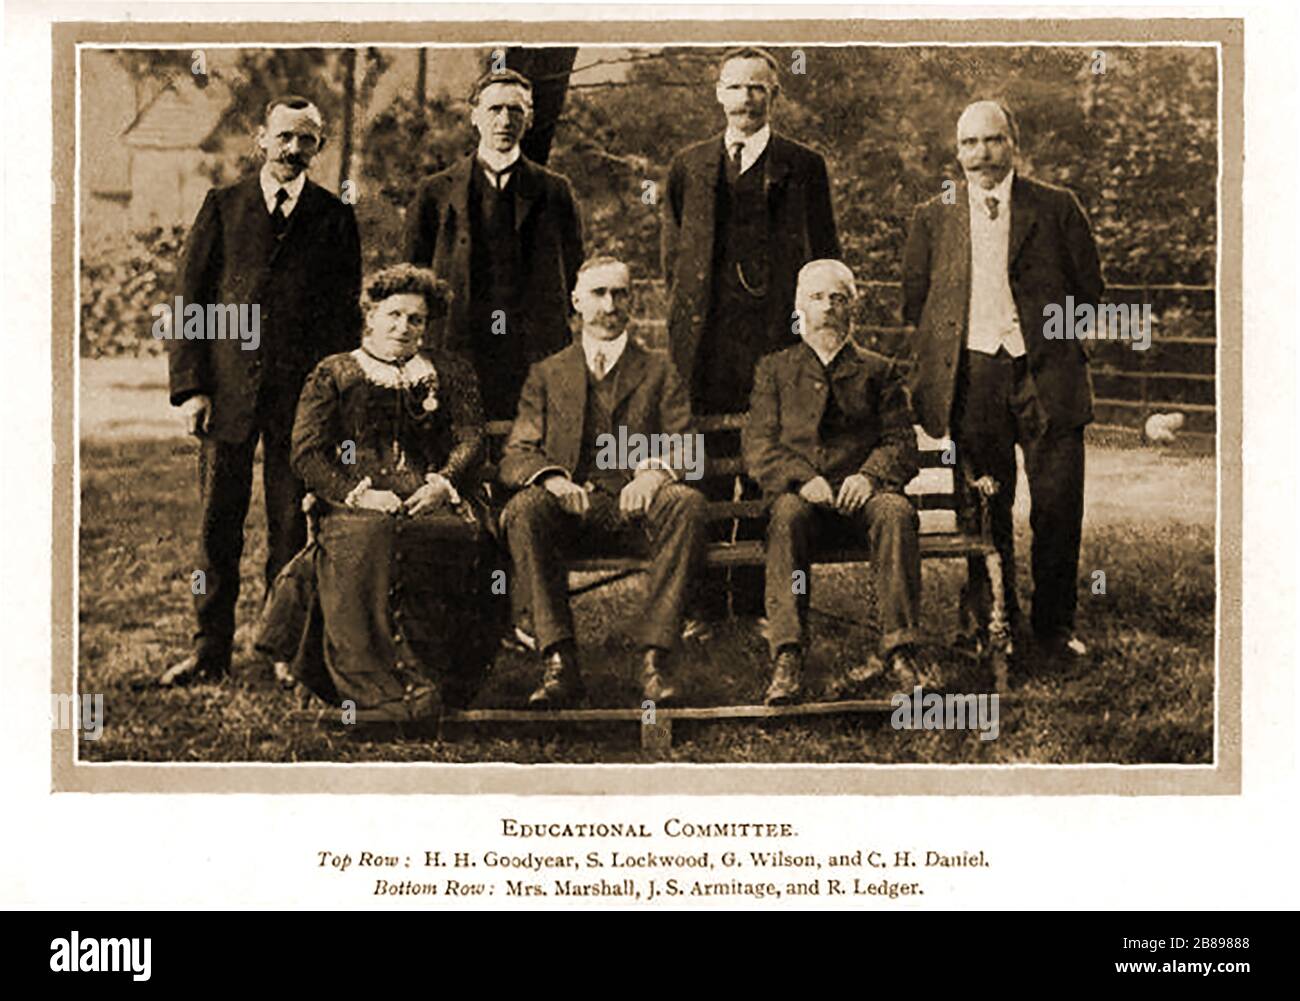 Huddersfield Industrial Society - ein frühes Porträtfoto des Bildungskomitees mit Namen - Goodyear, Lockwood, Wilson, Daniel, Mrs Marshall, Armitage, Ledger. Stockfoto